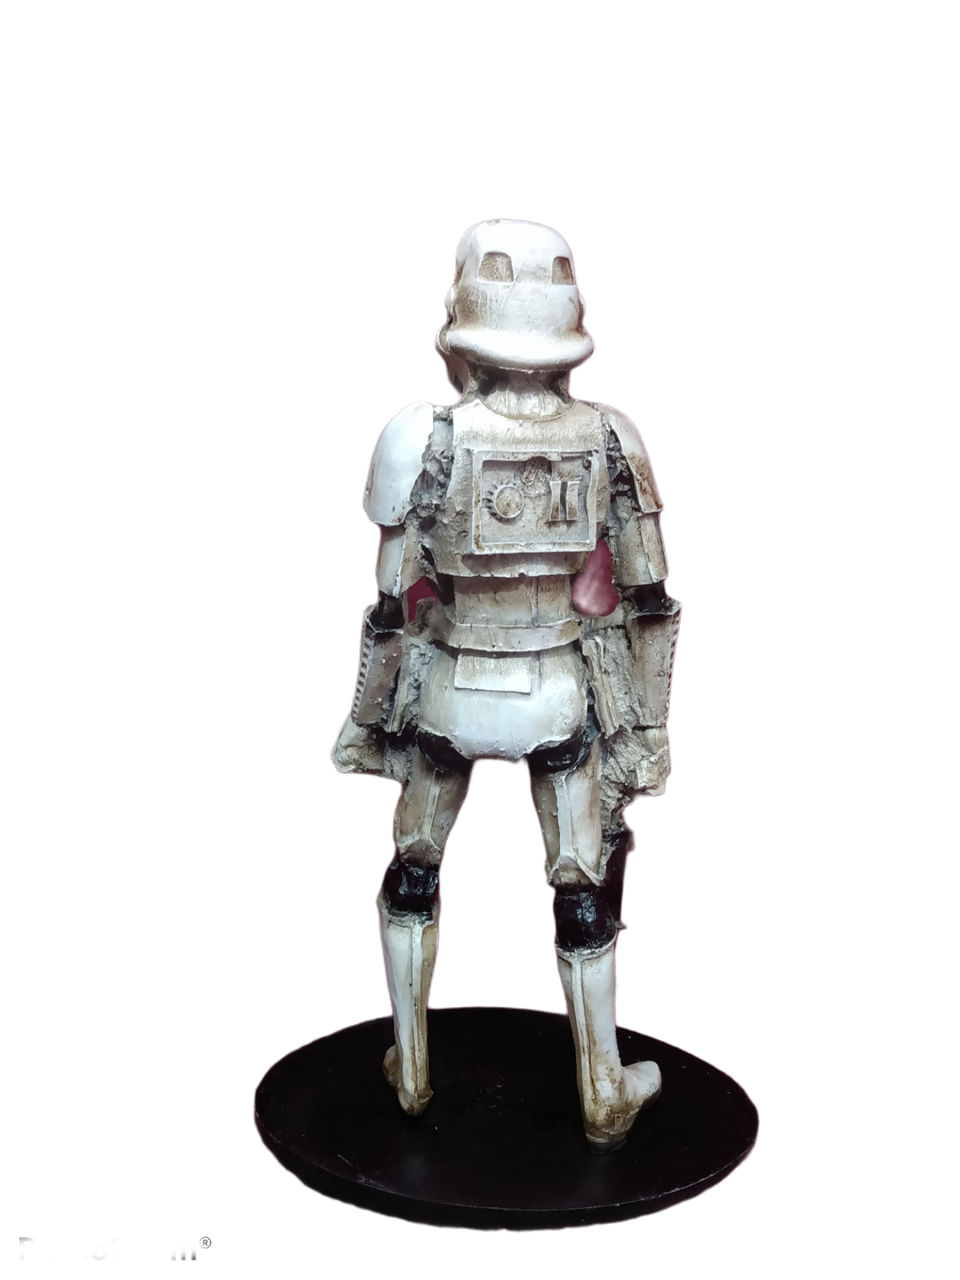 Miniatura - Scout Trooper - Coleção xadrez Star Wars 